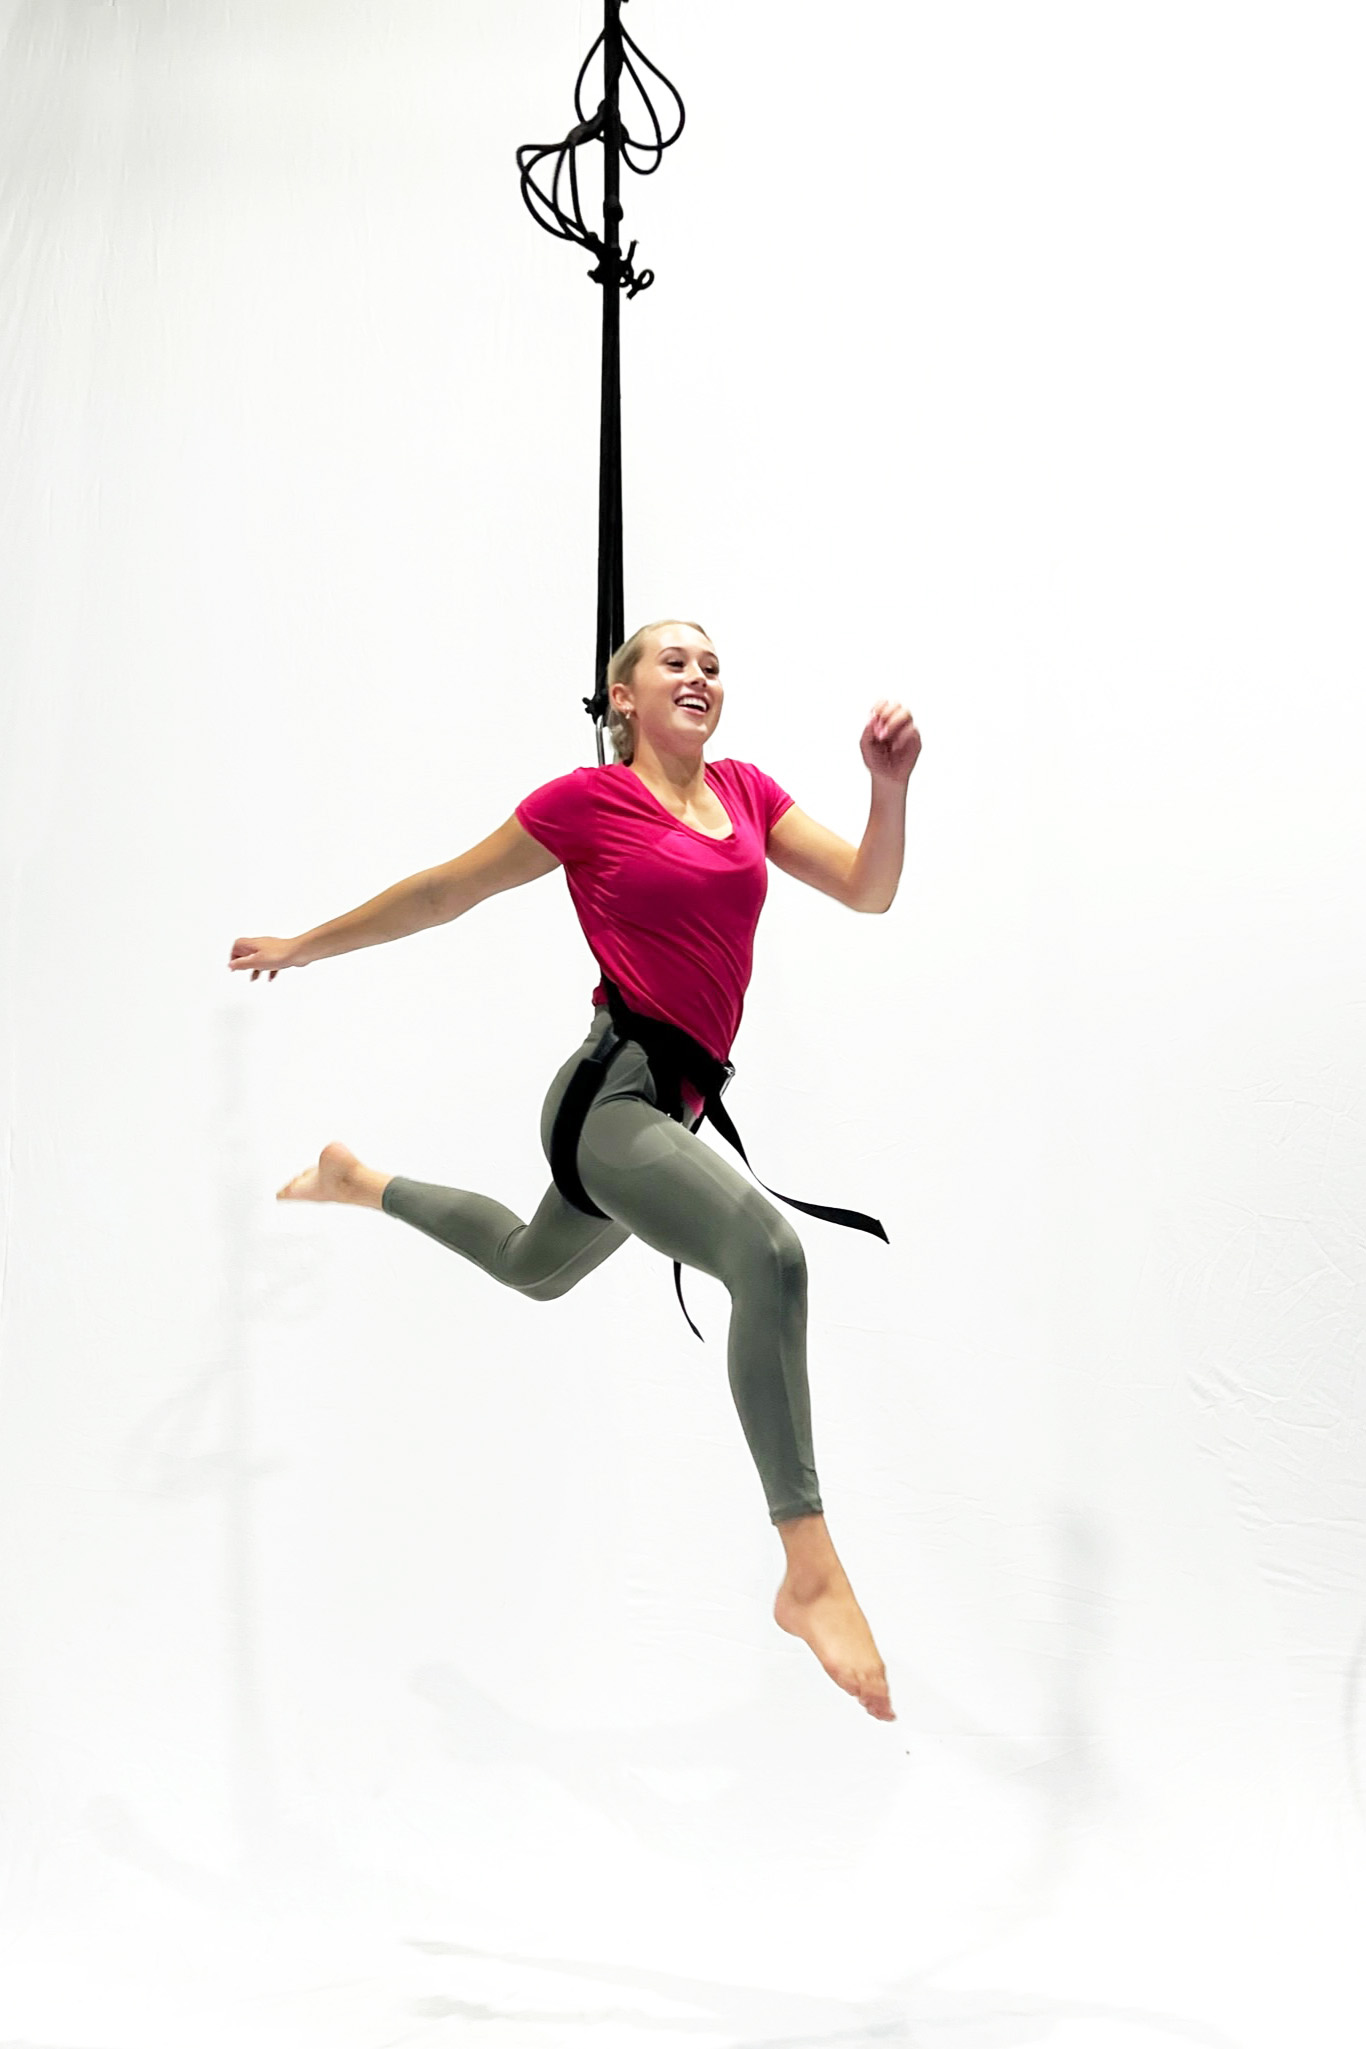 Adjustable bungee cords kit for harness calisthenics, acrobatics and yoga  hammocks - Aerial Yoga Swings & Aerial Silks made in Europe